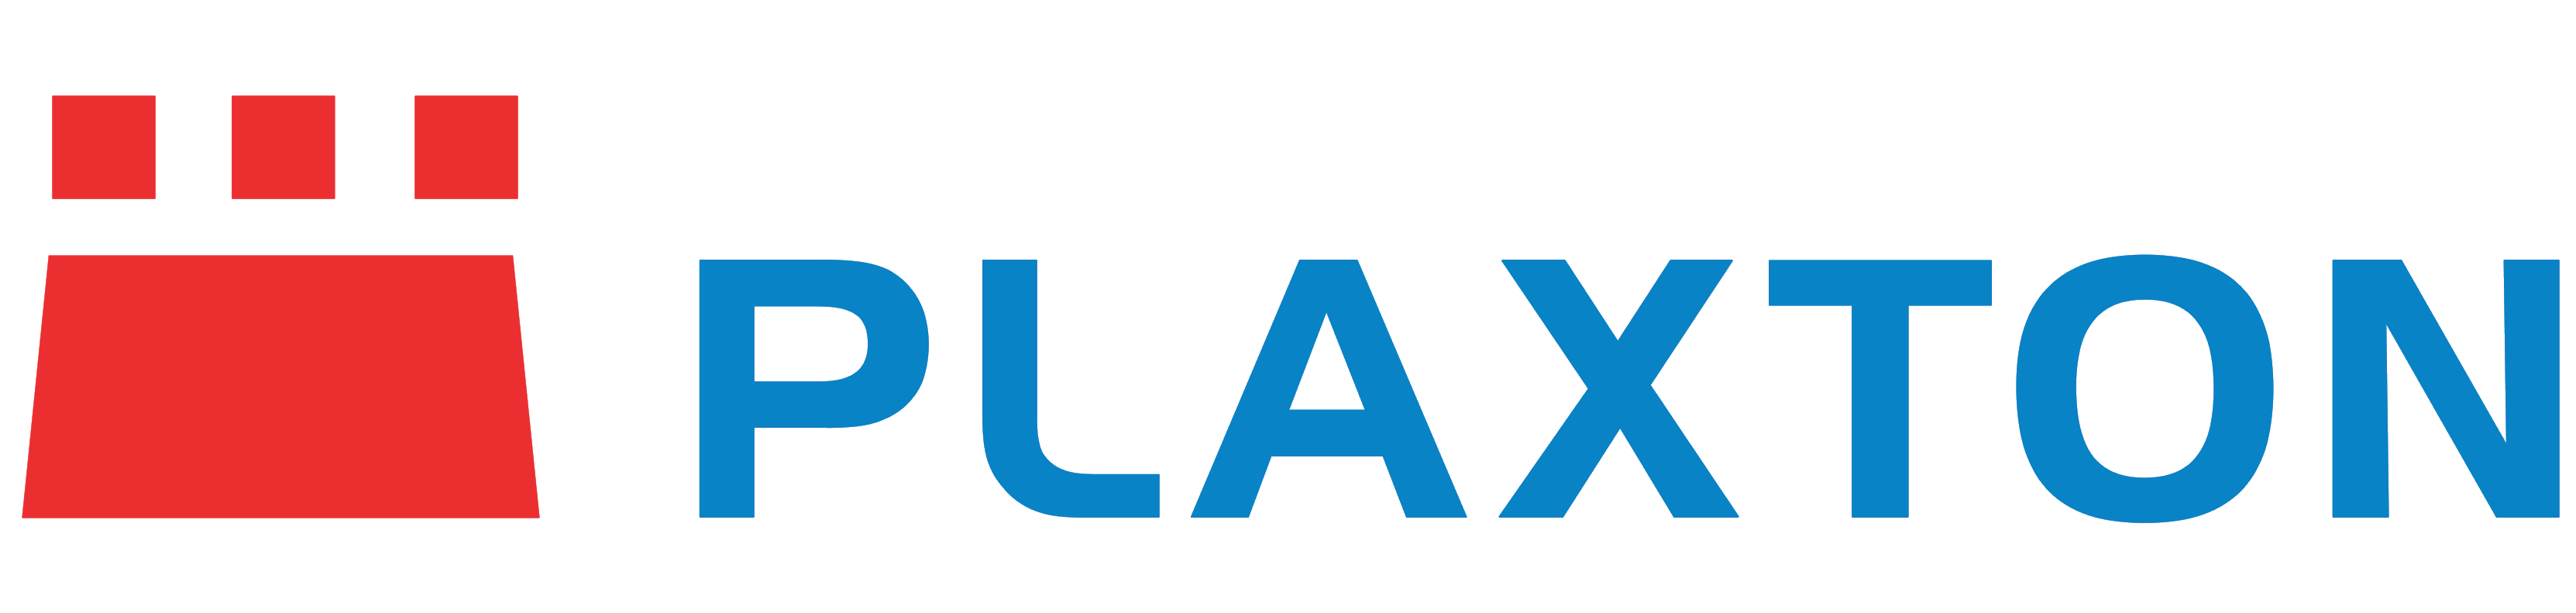 Plaxton logo, logotype